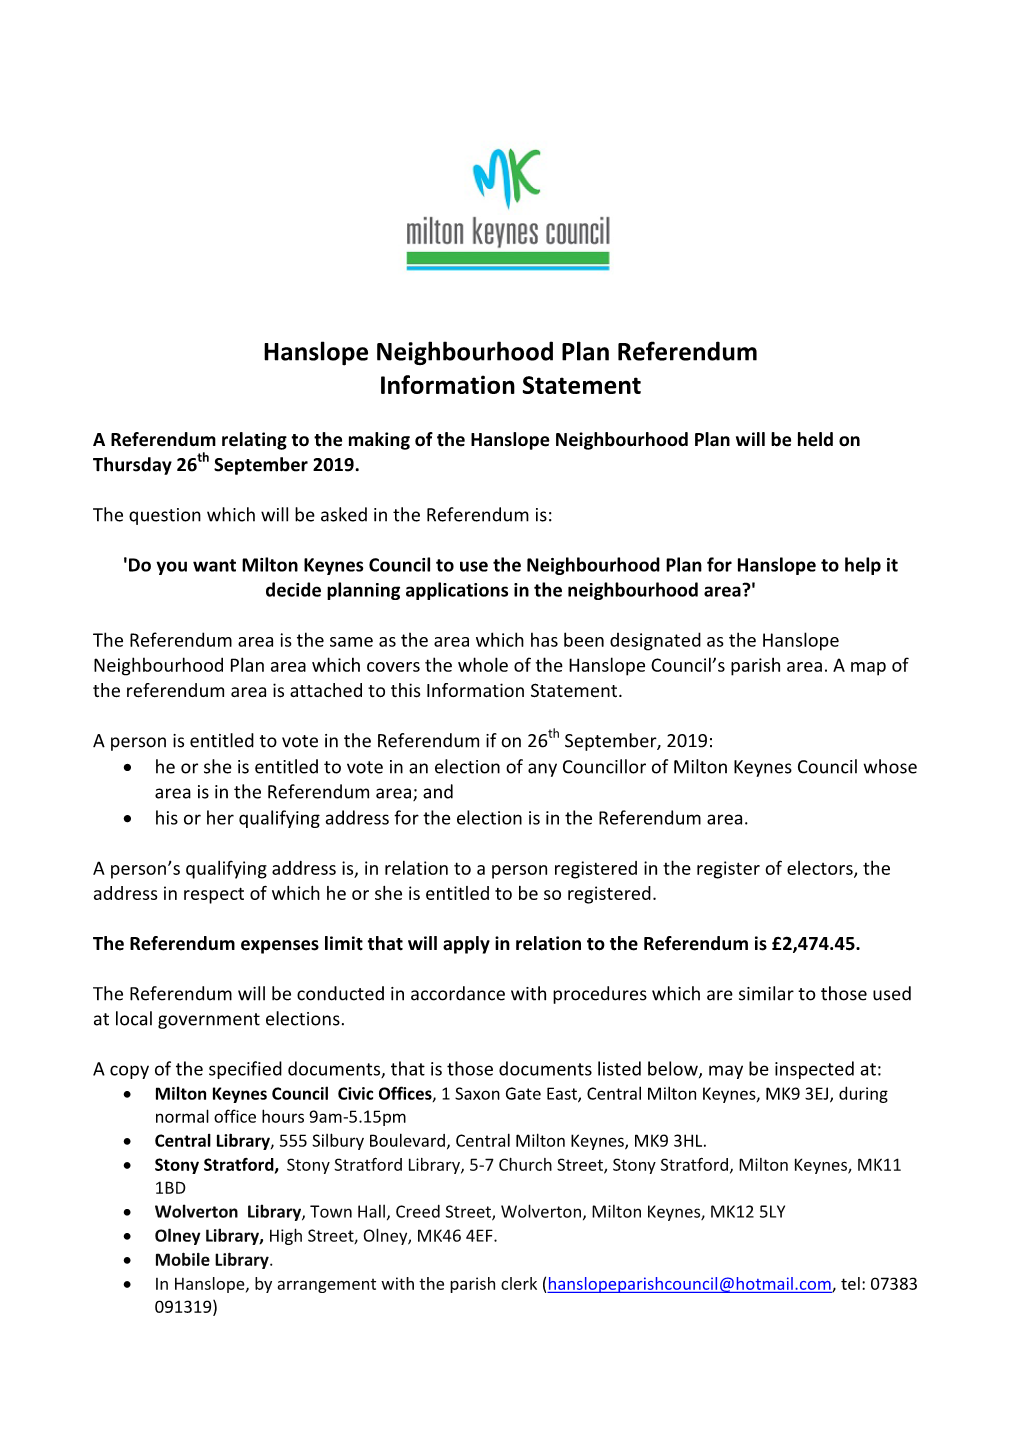 Hanslope Neighbourhood Plan Referendum Information Statement